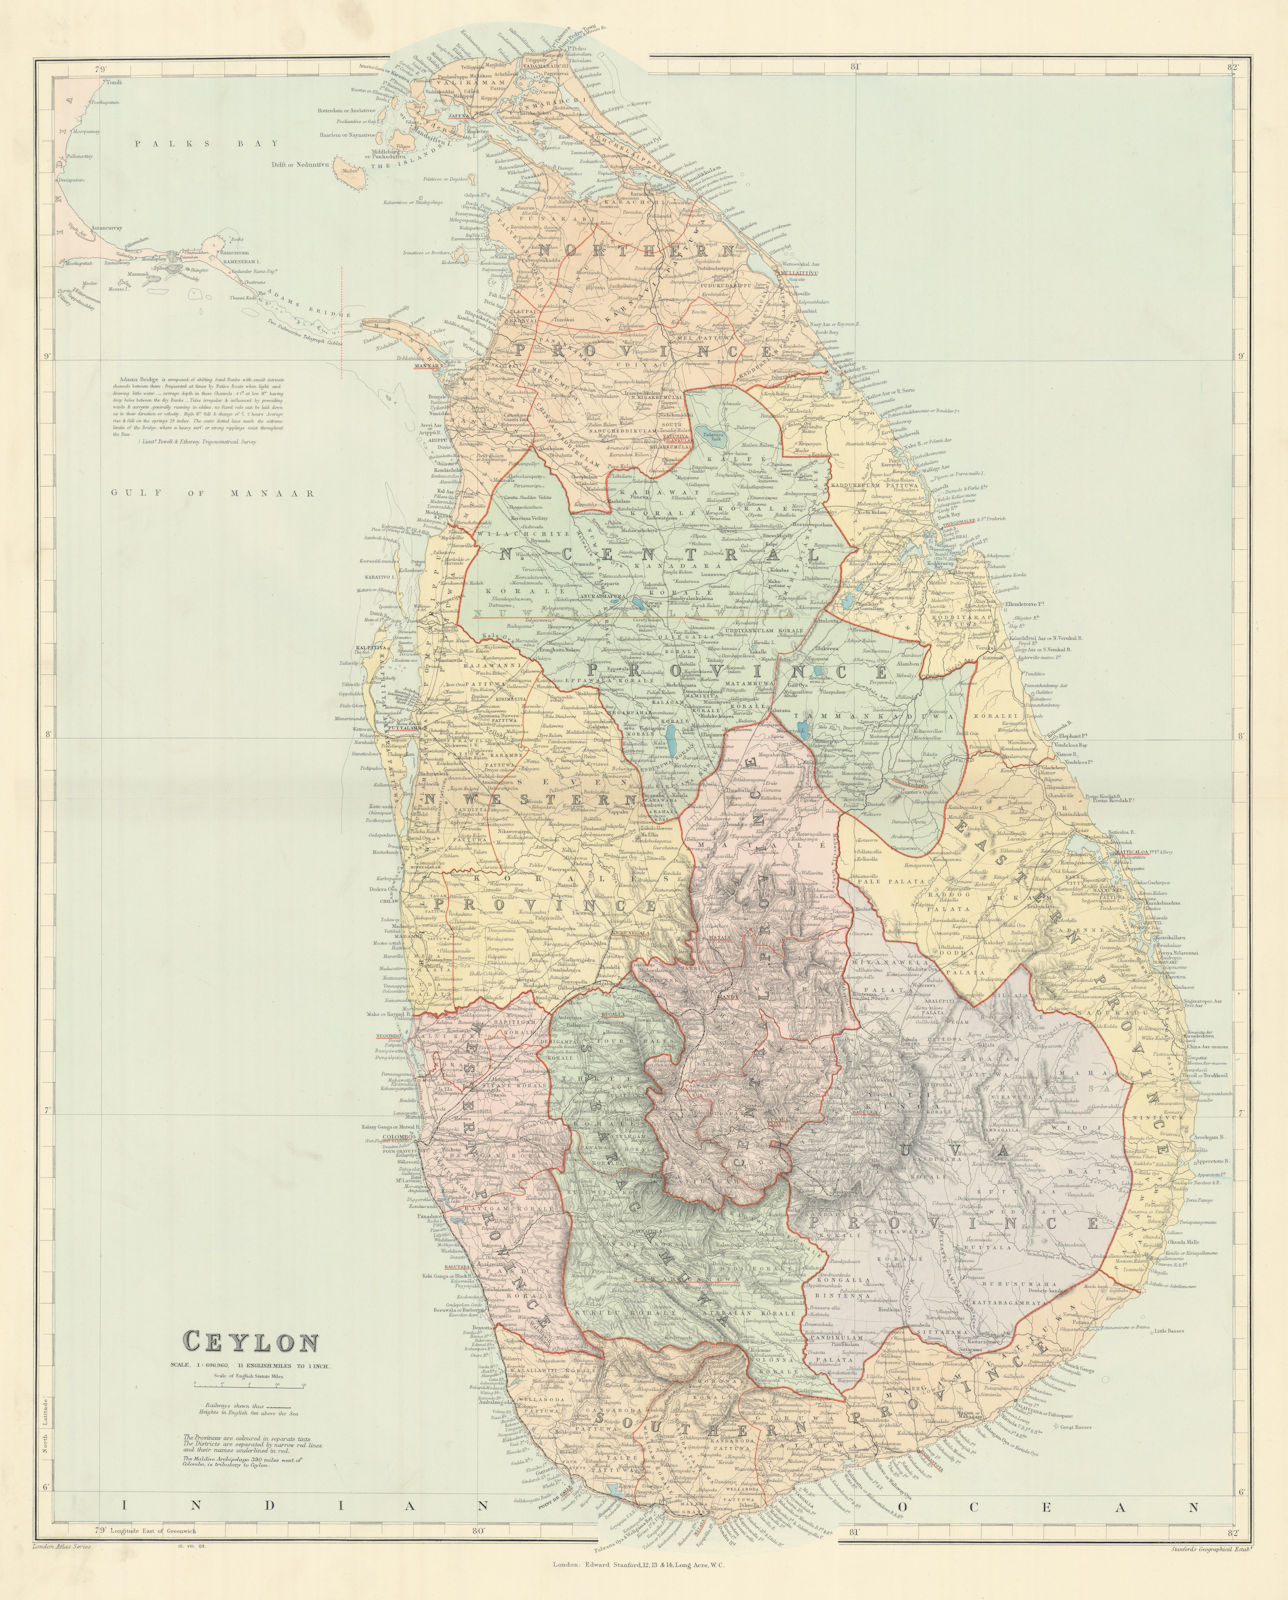 Ceylon. Sri Lanka. Provinces & railways. Large 66x53cm. STANFORD 1904 old map